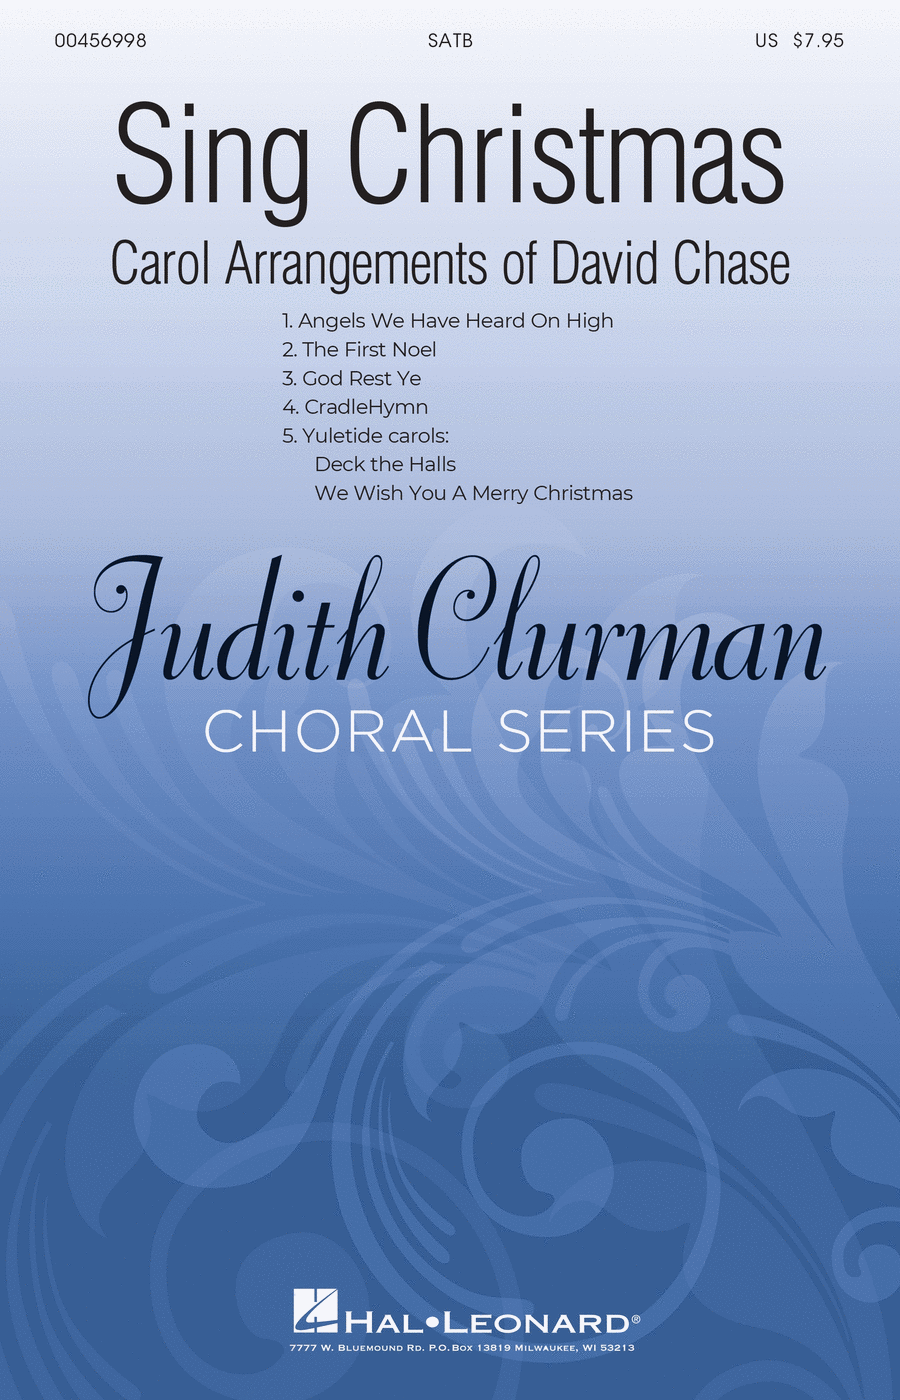 Sing Christmas - The Carol Arrangements of David Chase